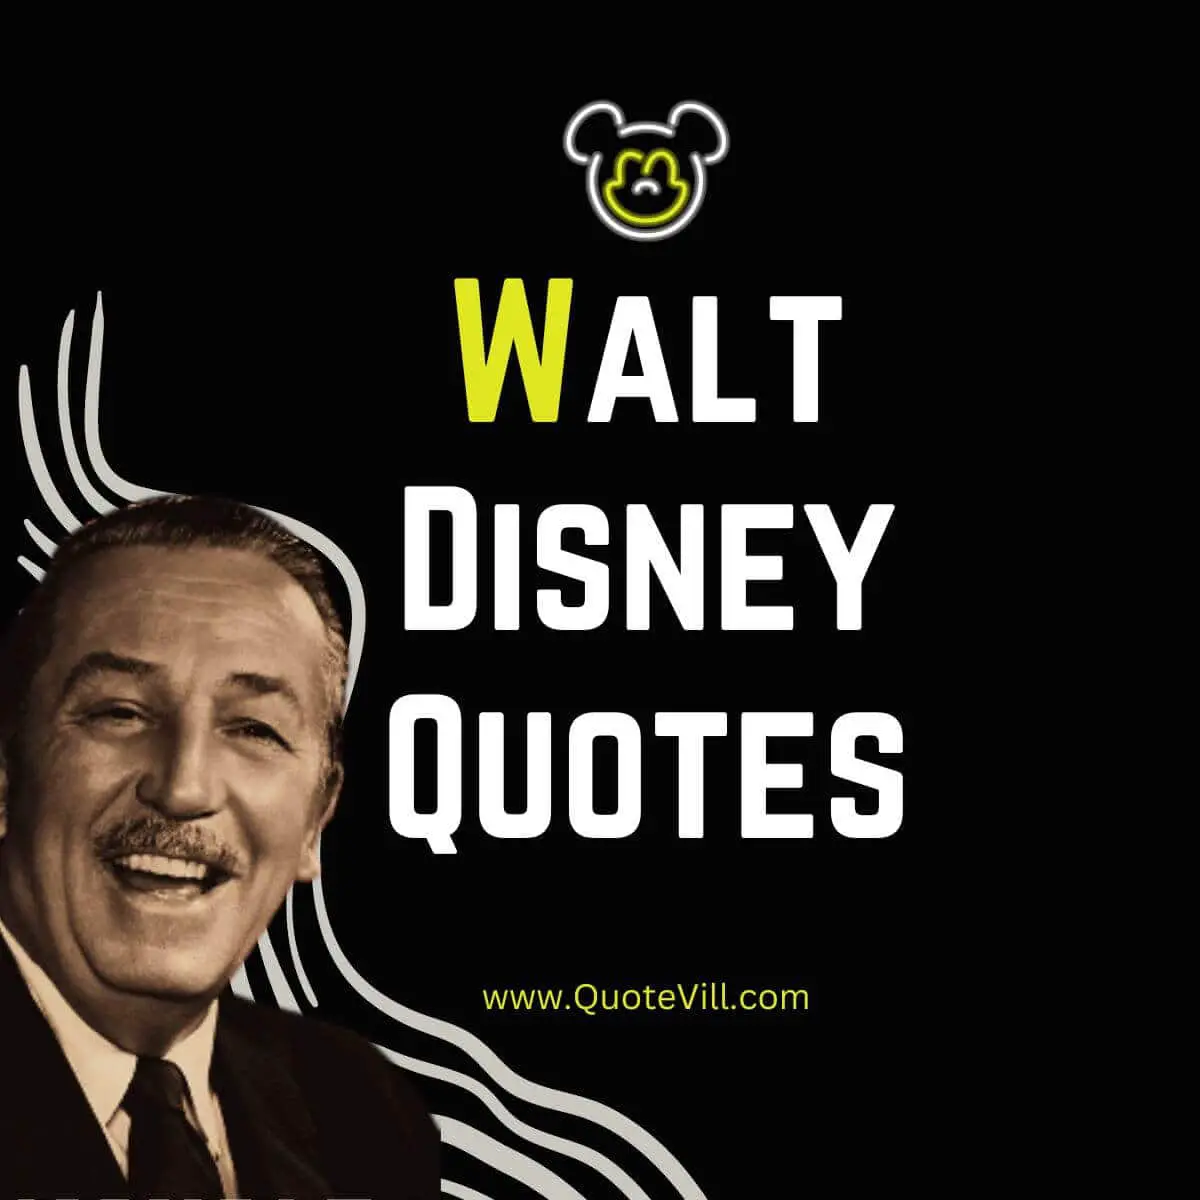 Walt-Disney-Quotes